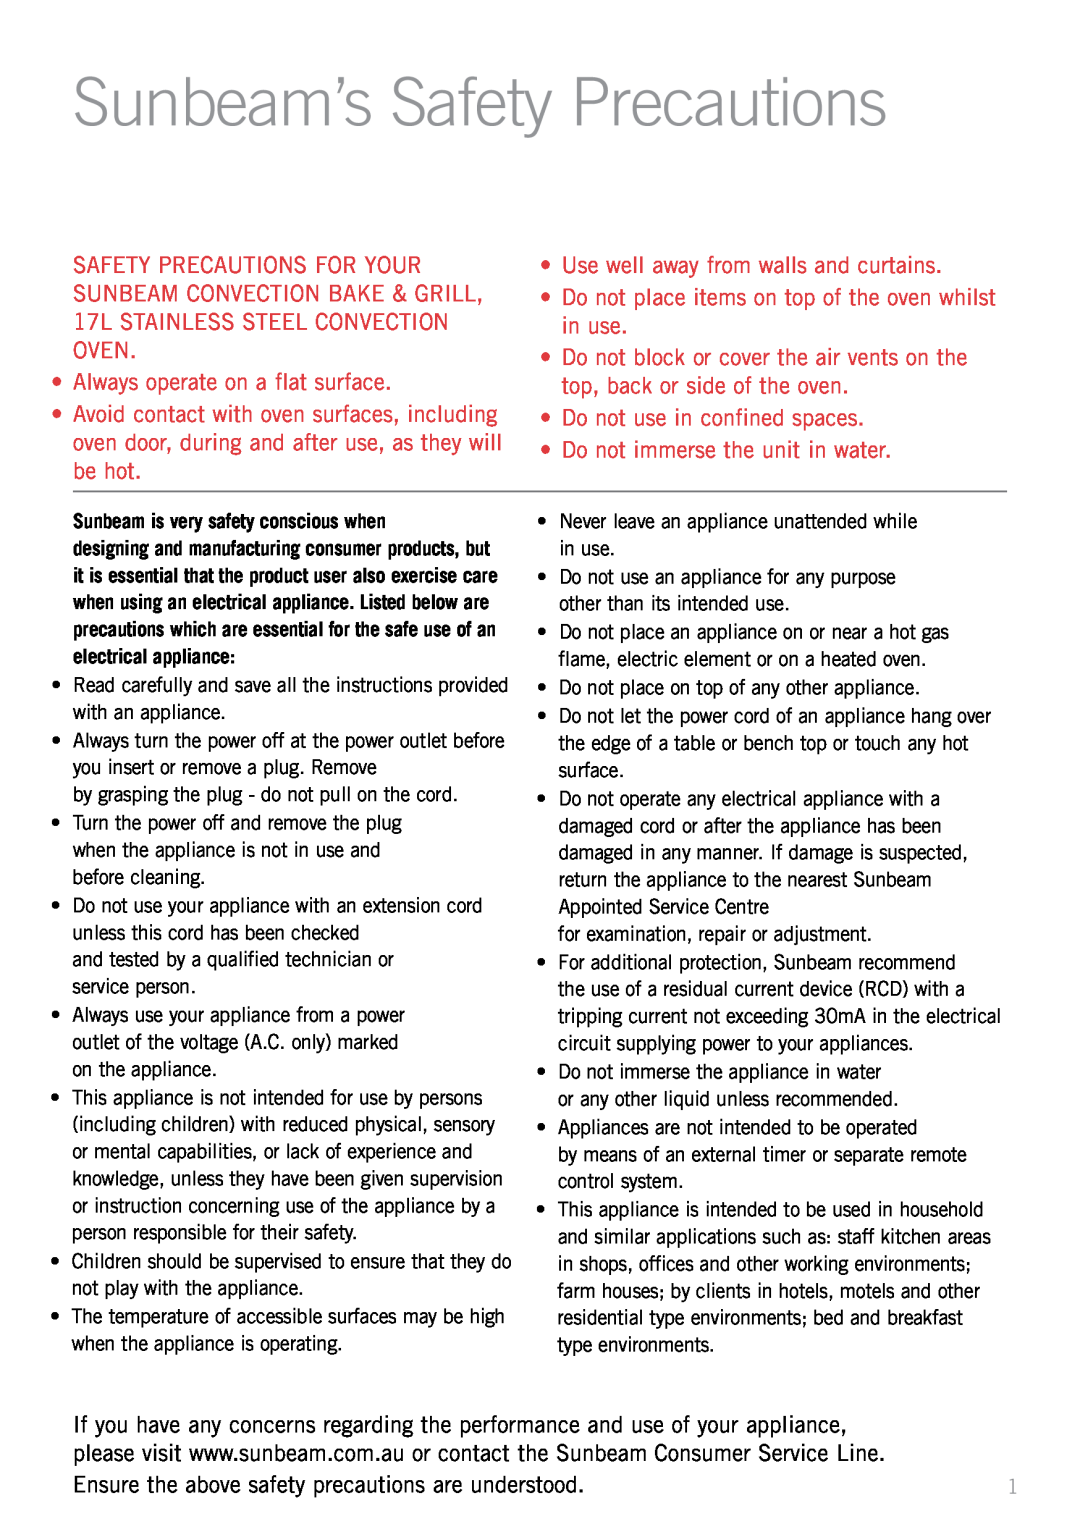 Sunbeam BT6700 manual Sunbeam’s Safety Precautions 